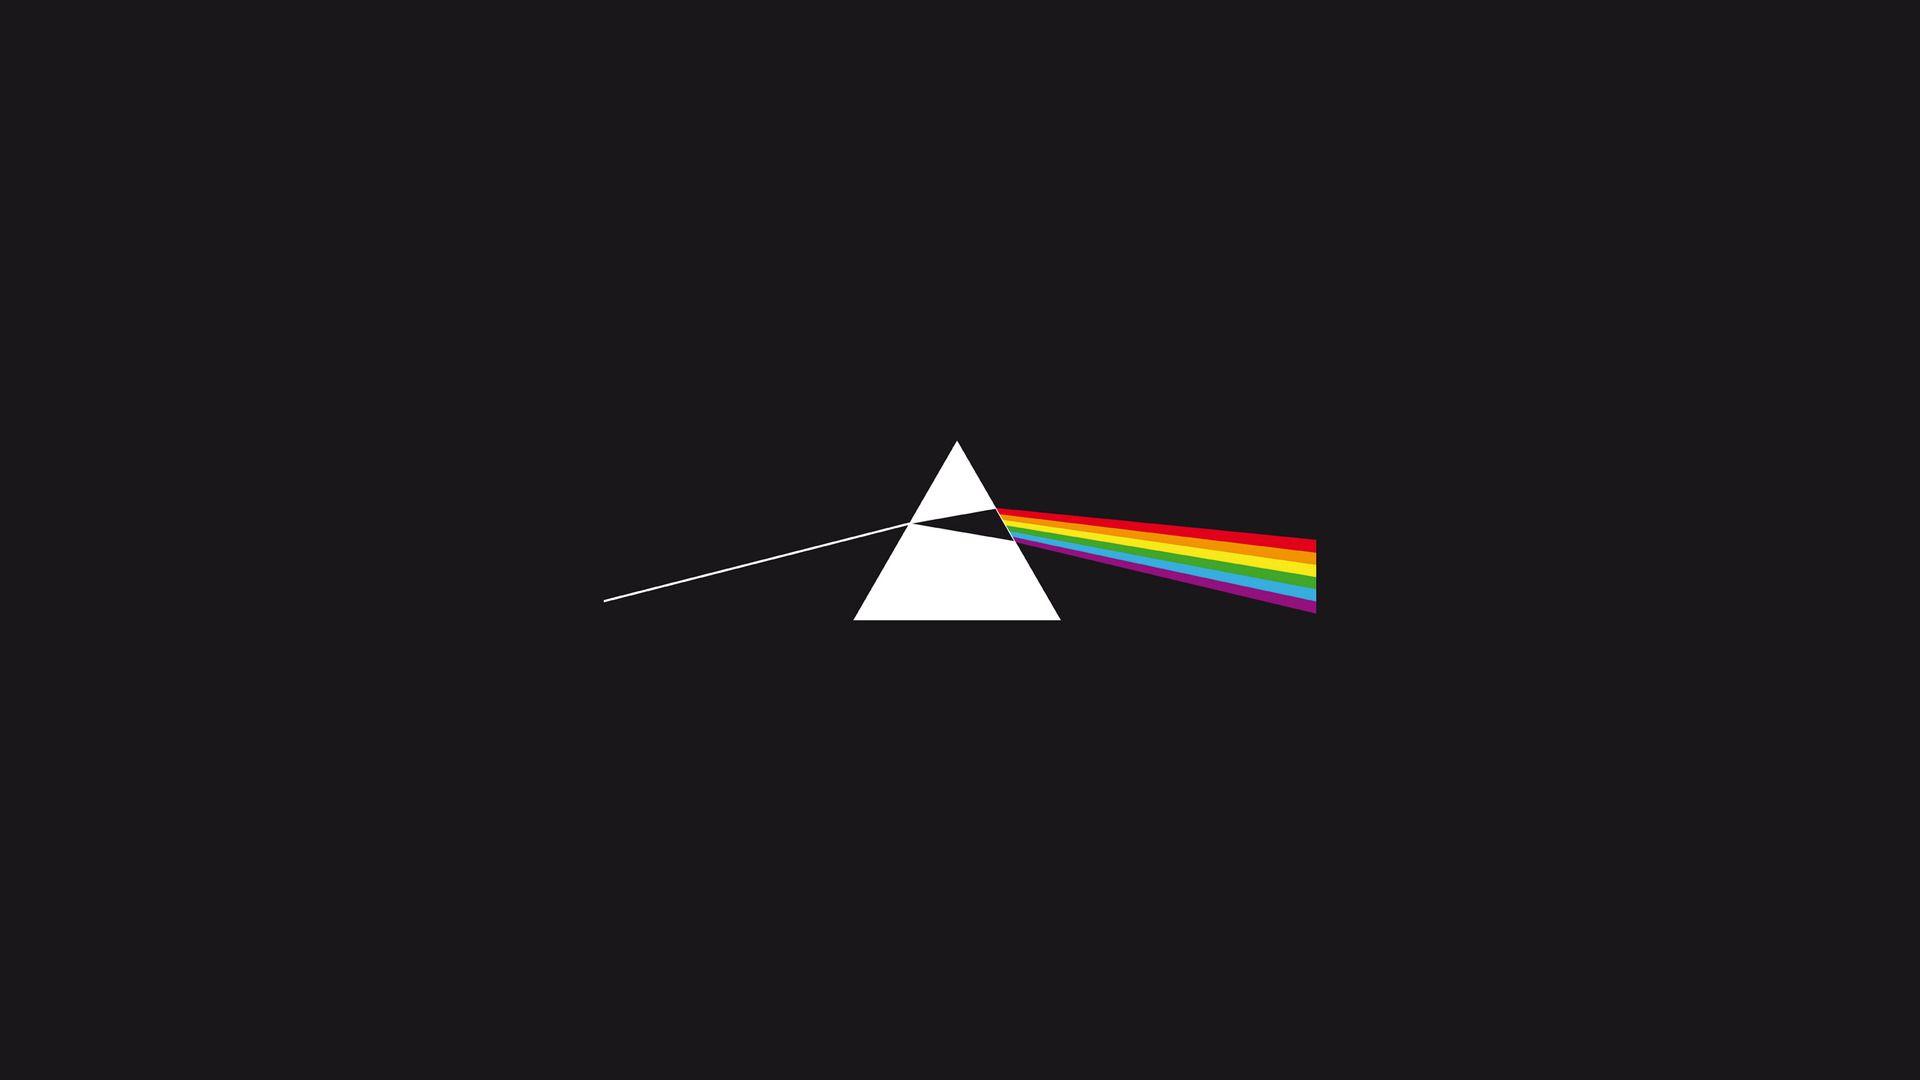 Prism Rainbow Pink Floyd Flat Minimal Illustration Desktop